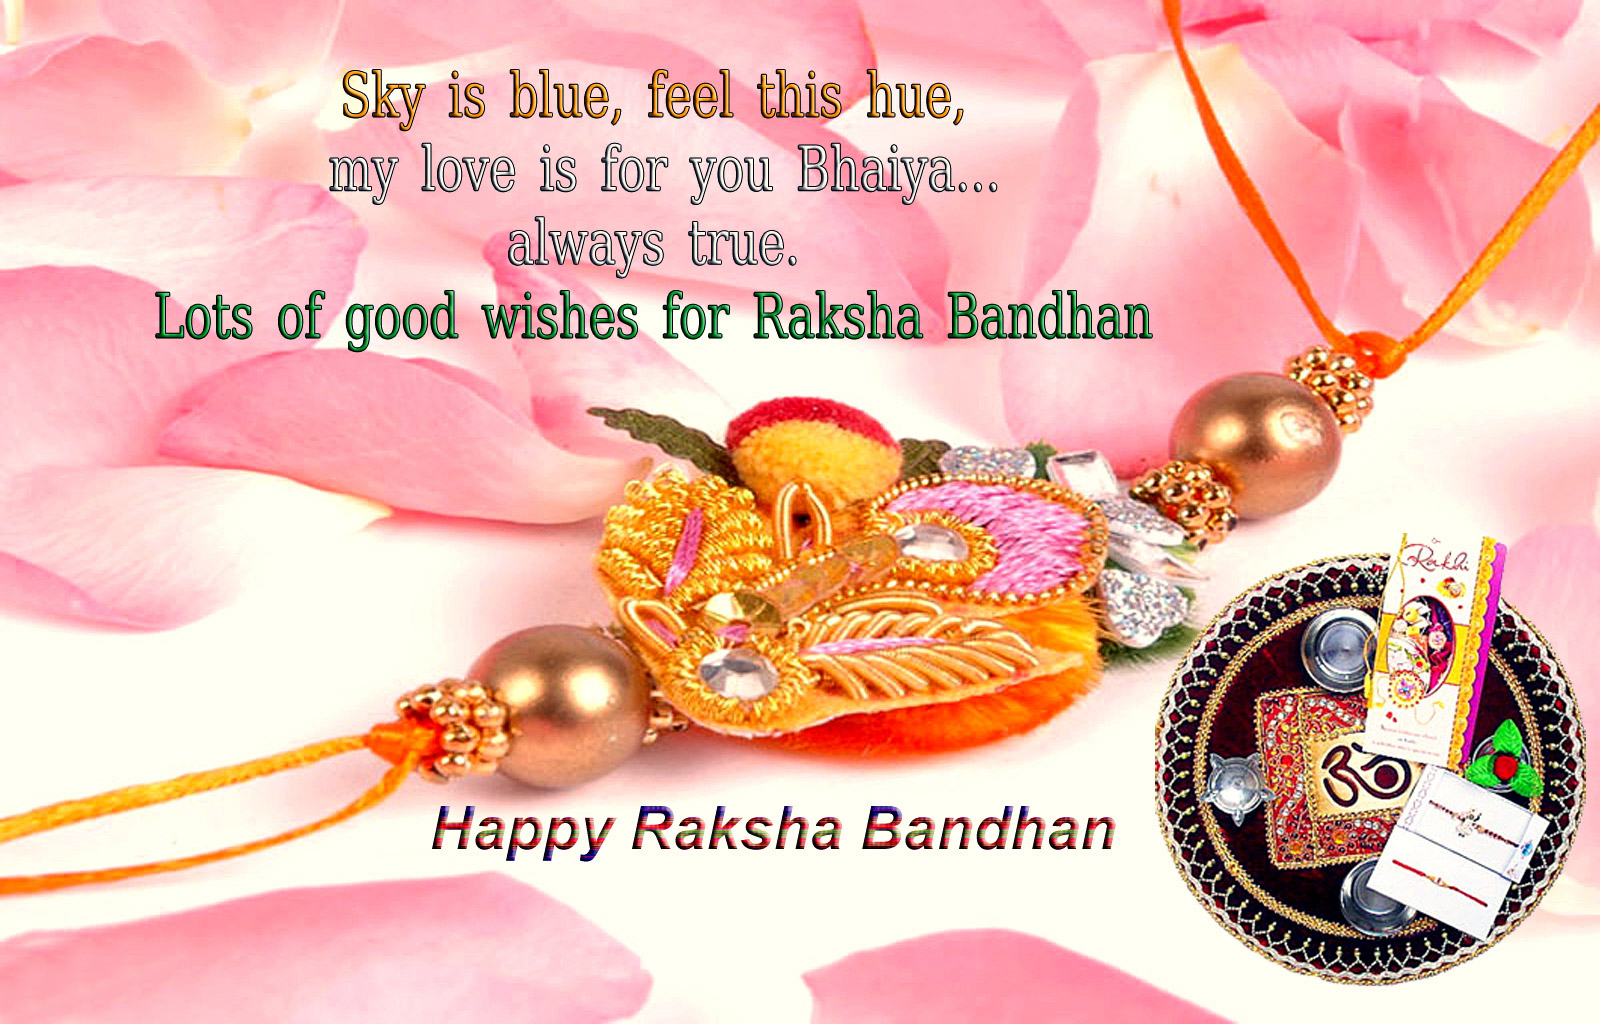 Happy Raksha Bandhan Greeting Cards